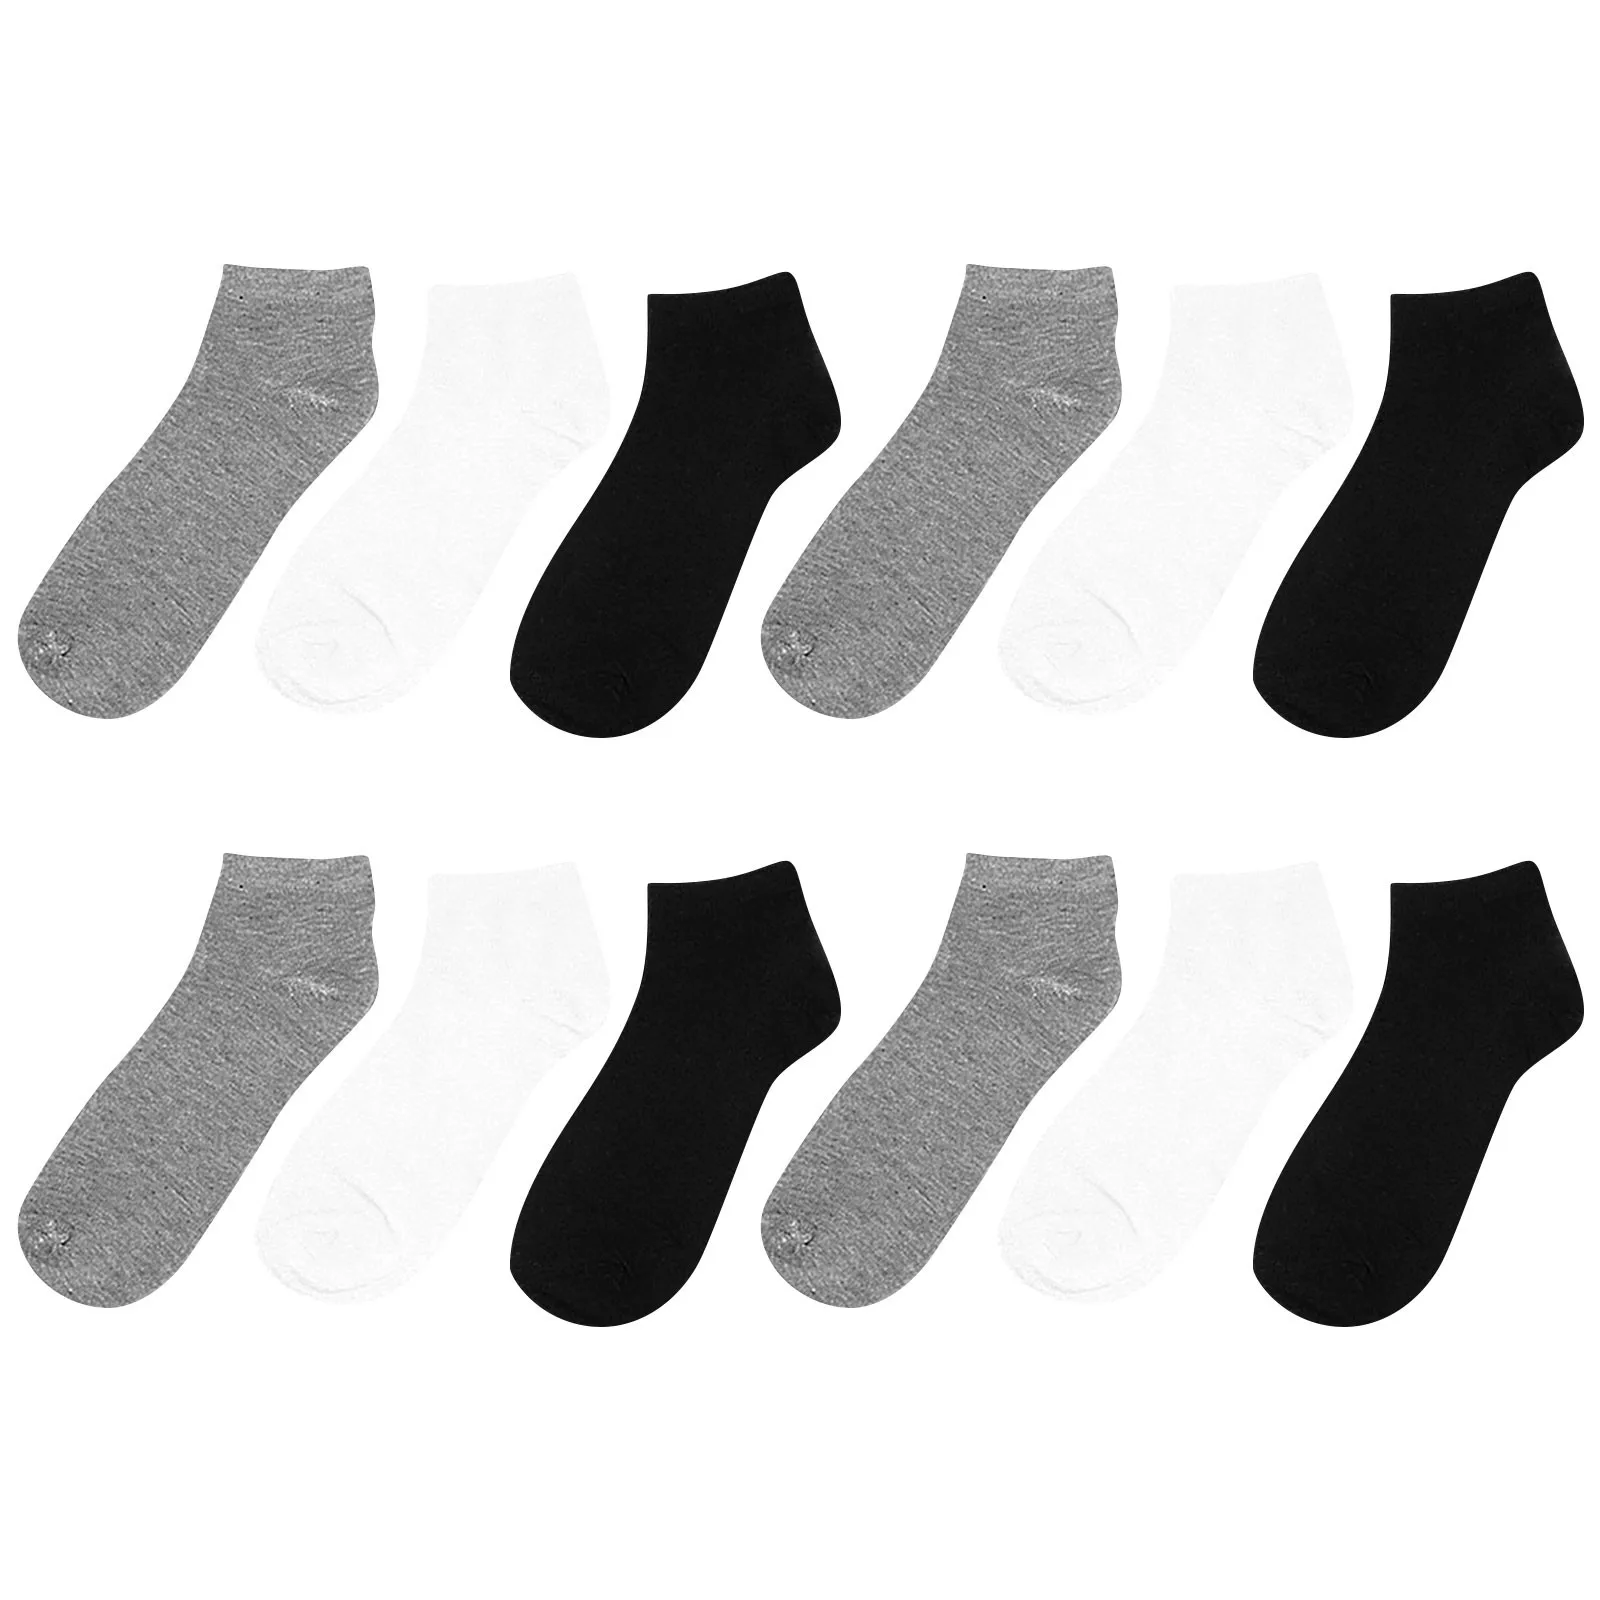 

12 Pairs Of Medium Size Men's And Women's Sports Socks, Warm Socks, Cotton Socks носки женские чулки носки Calcetines гетры